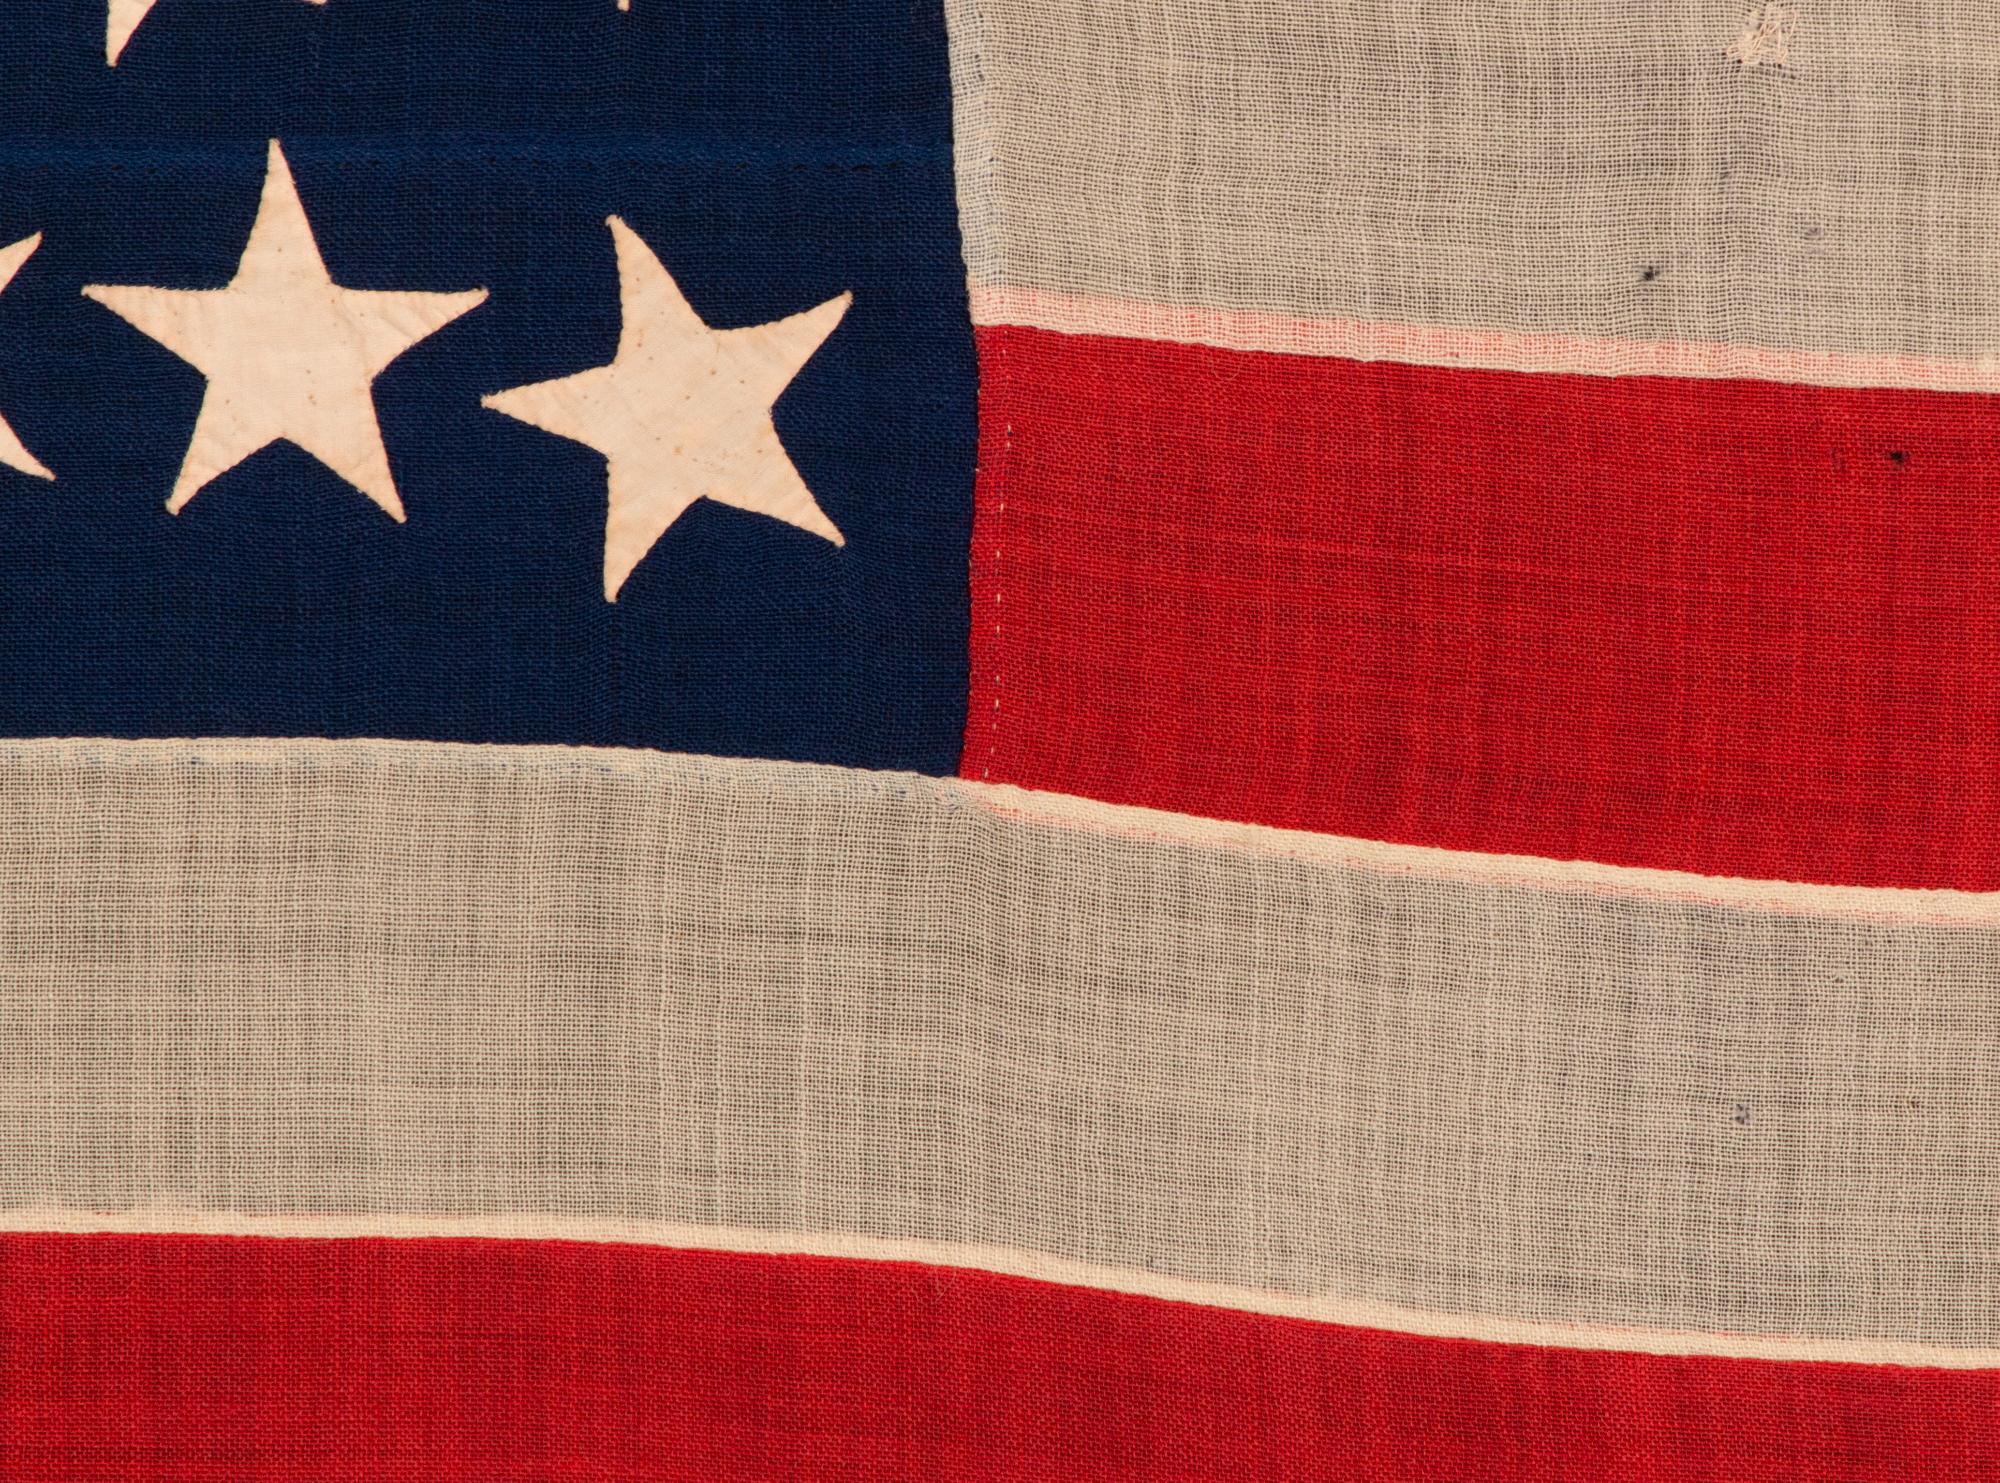 19th Century 38 Star Antique American hand sewn Flag, Colorado Statehood, circa 1876-1889